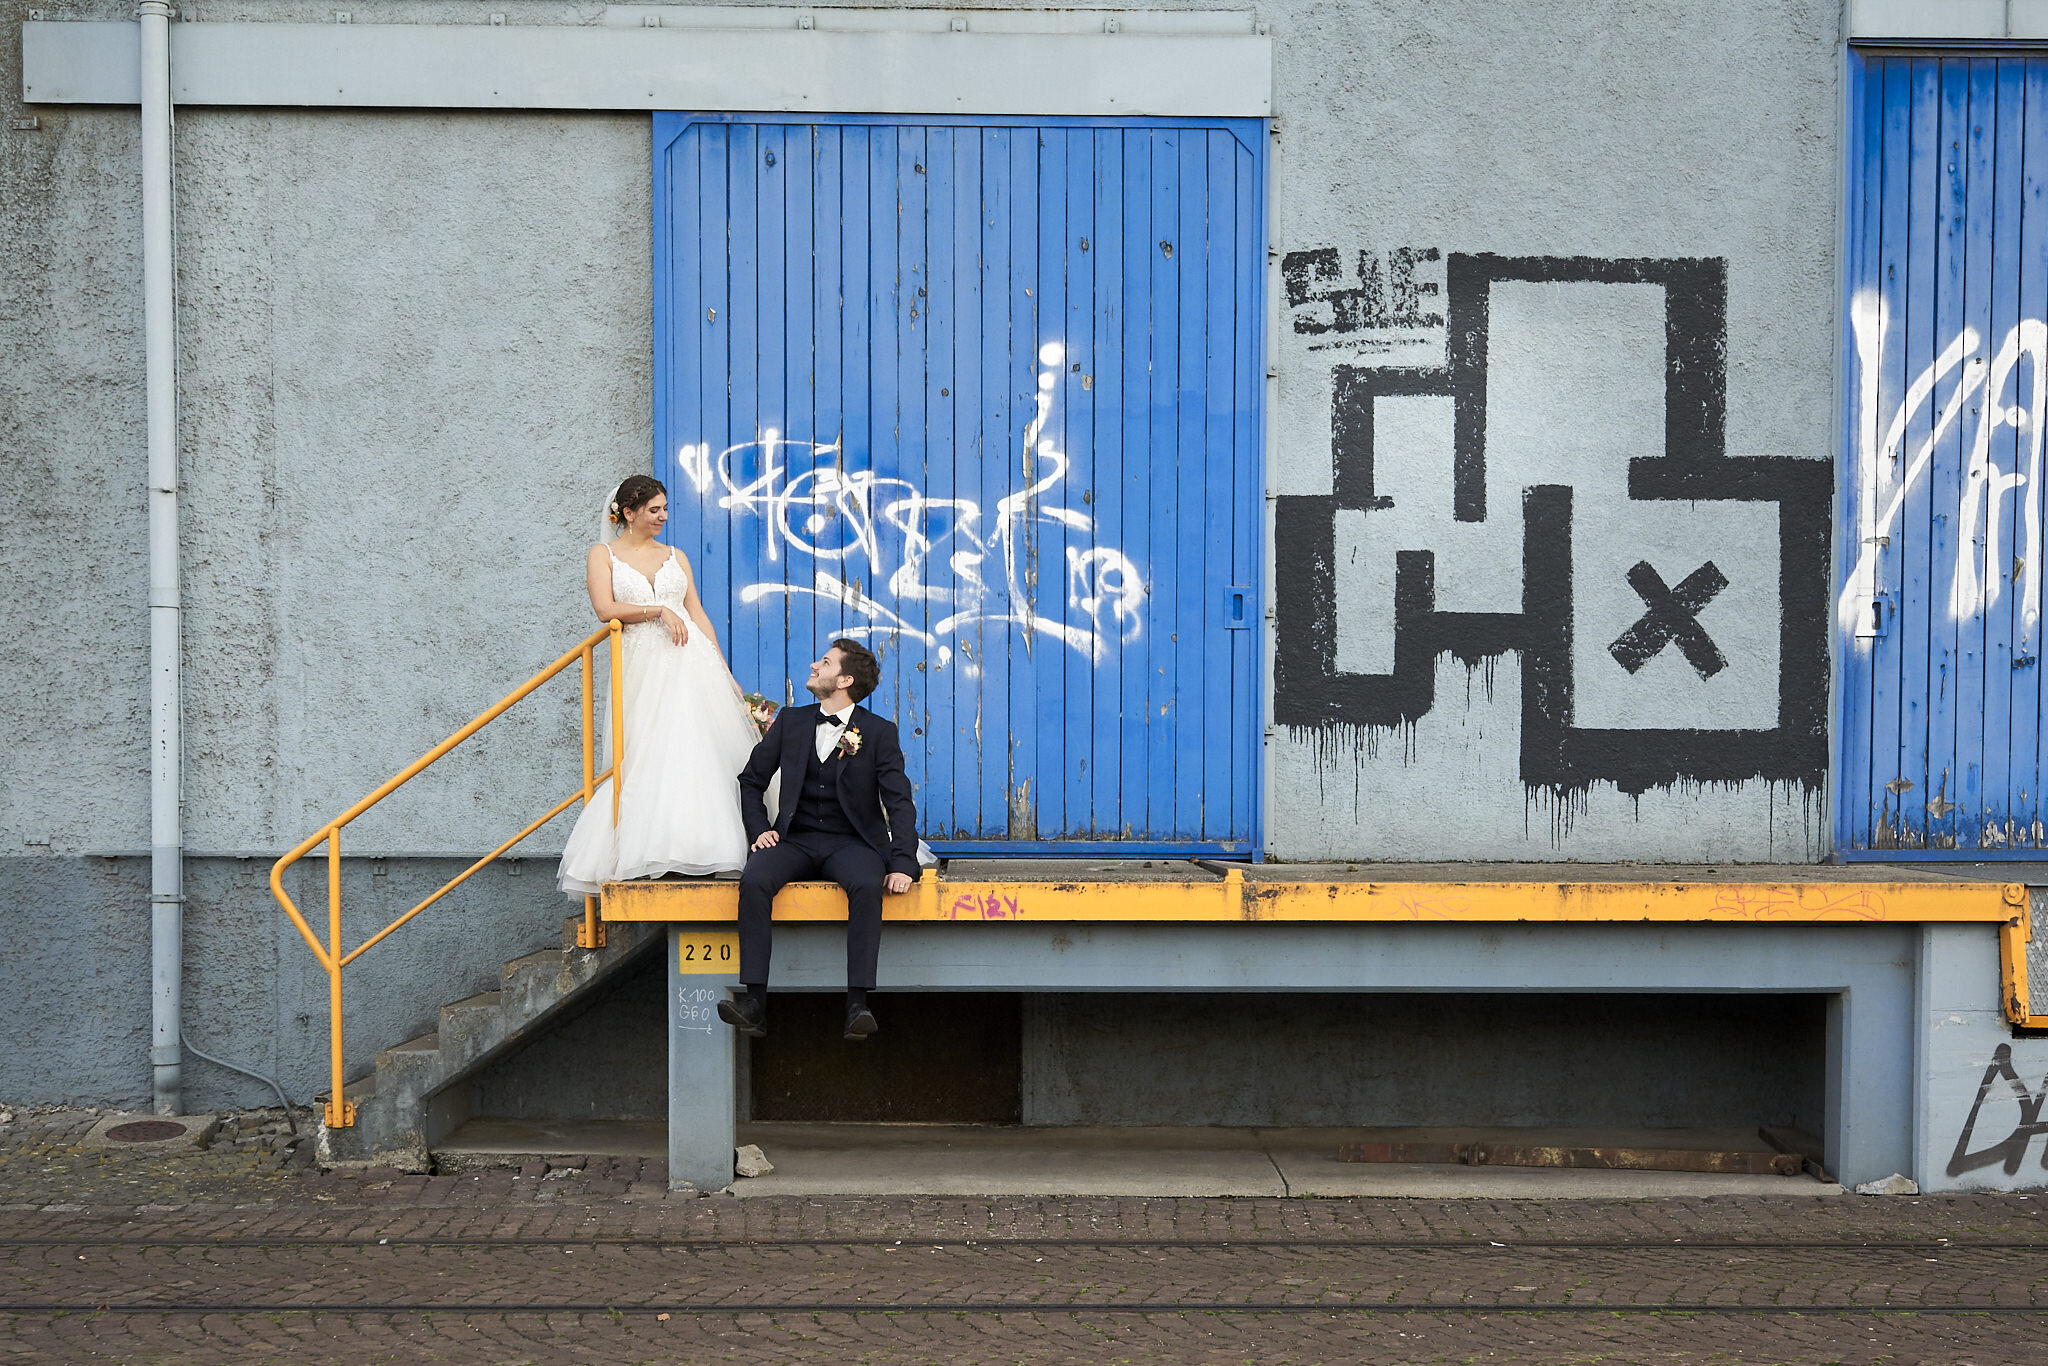  Wedding Photographer in Basel 